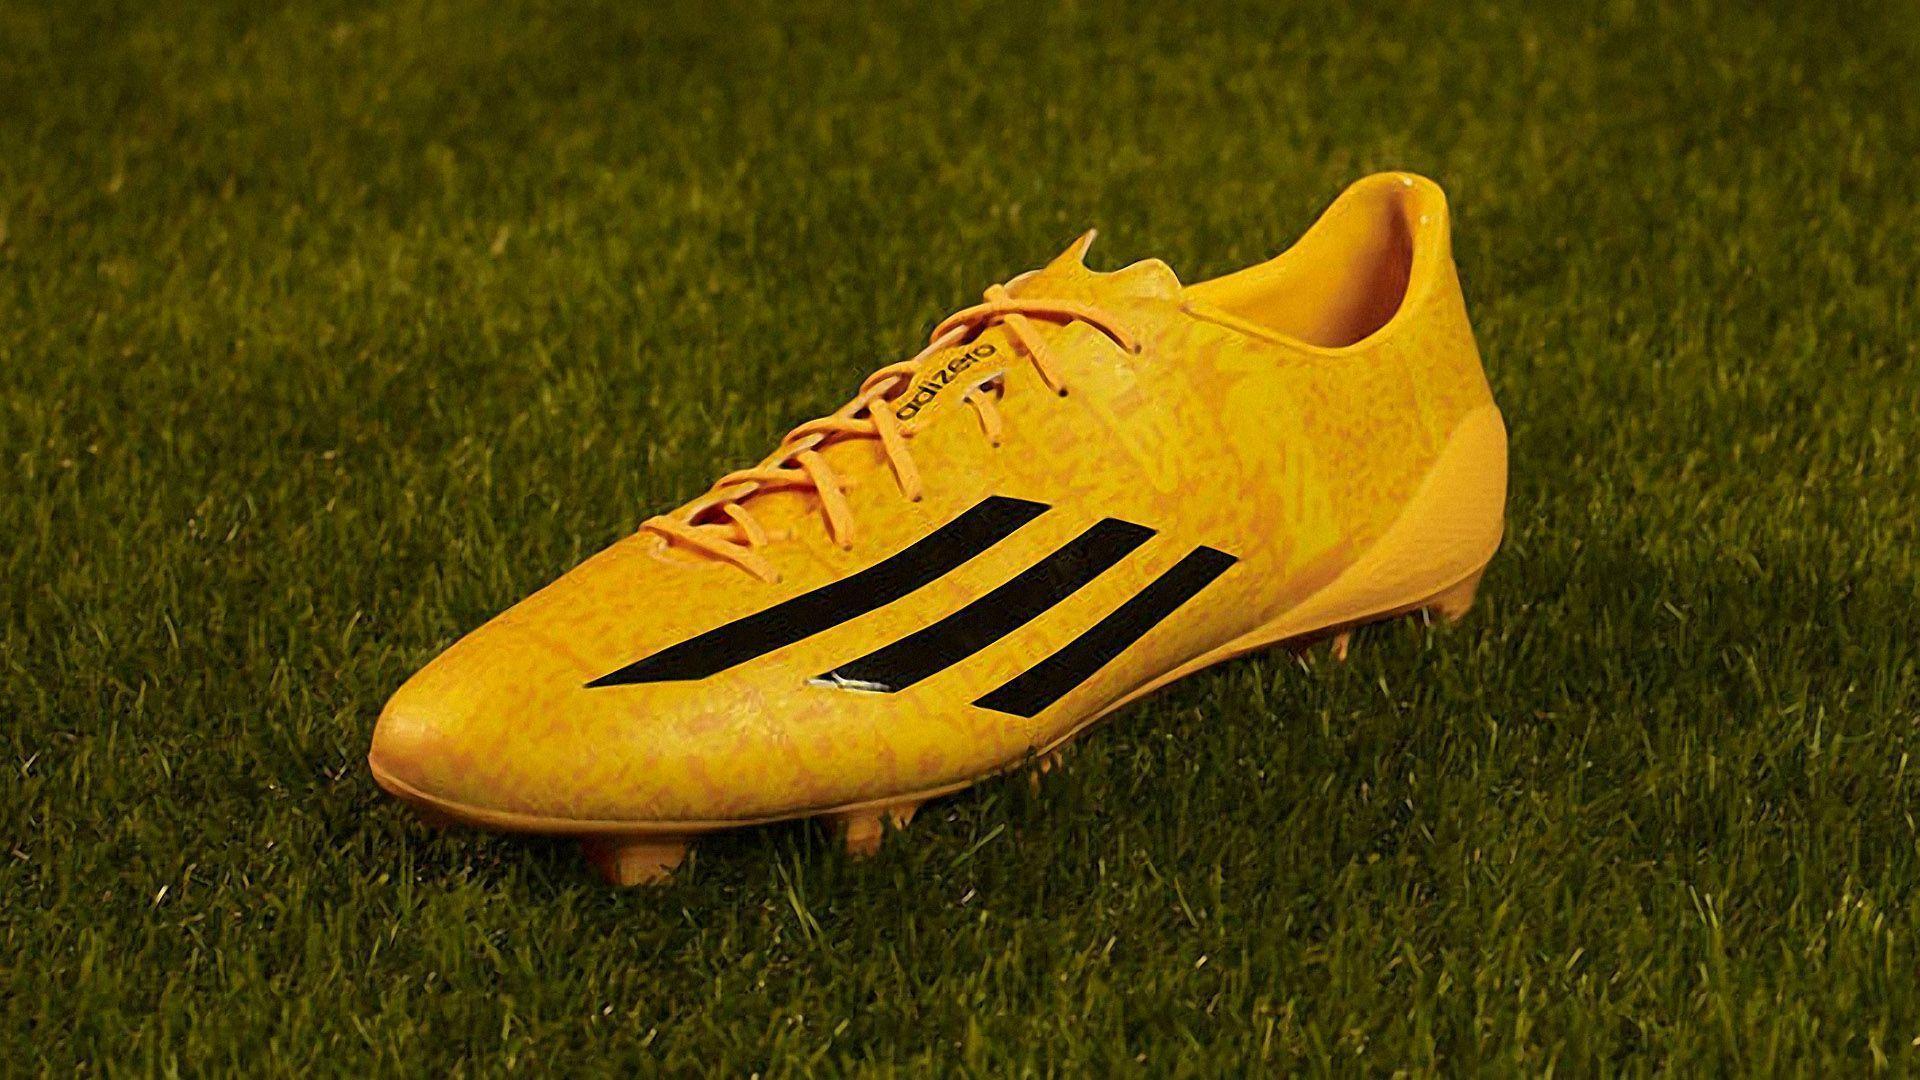 Gold Adidas Adizero Messi 2014 2015 Boot Wallpaper Wide Or HD